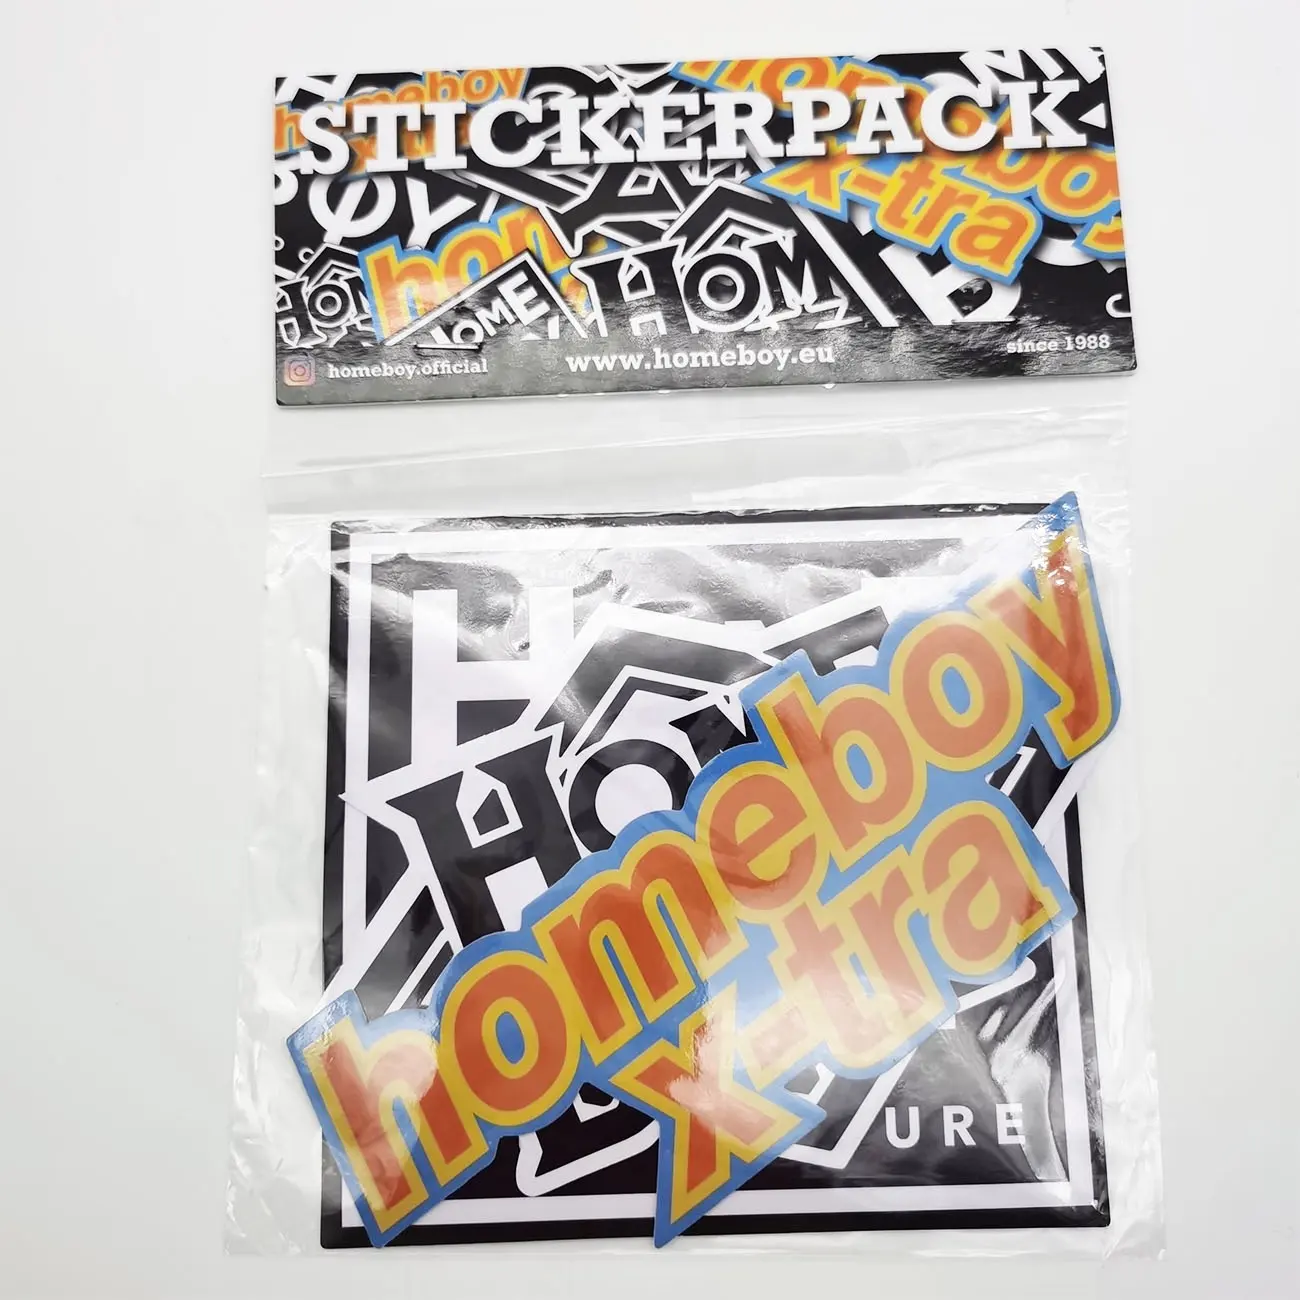 Custom Design Waterproof Vinyl Sticker Packs, Sunlight Proof Sticker Packaging